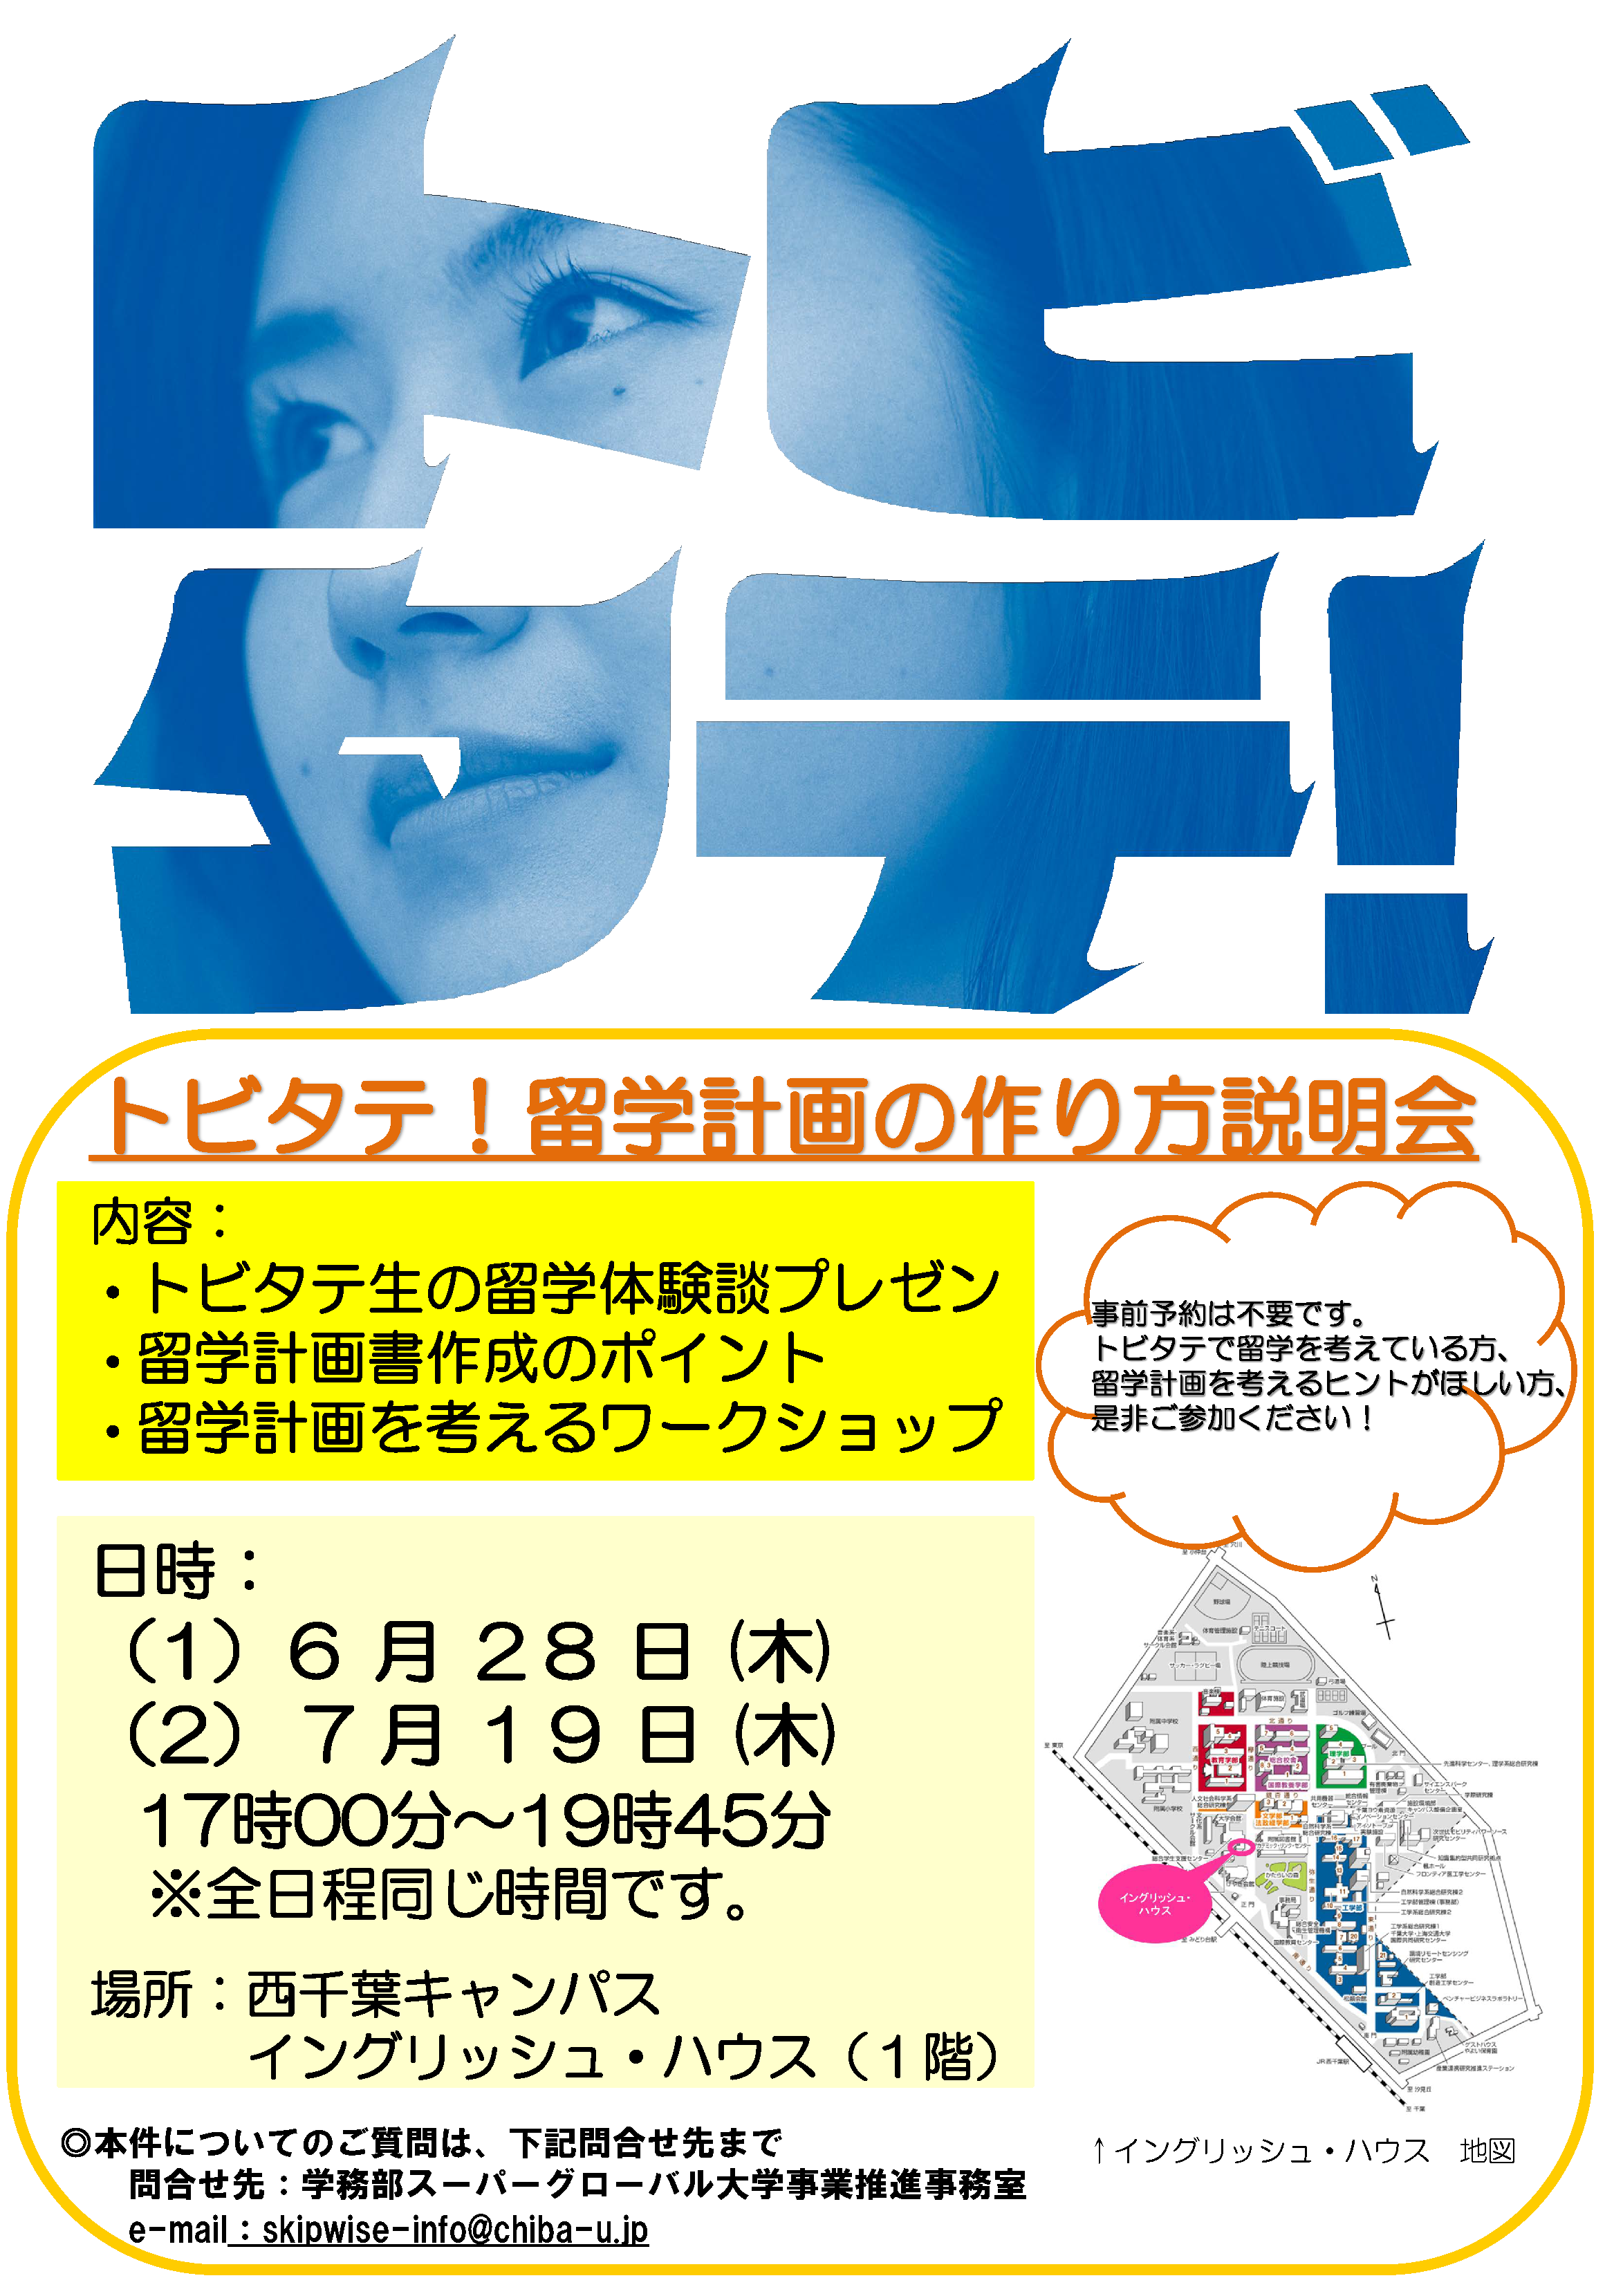 tobitate_tsukurikata_poster.png